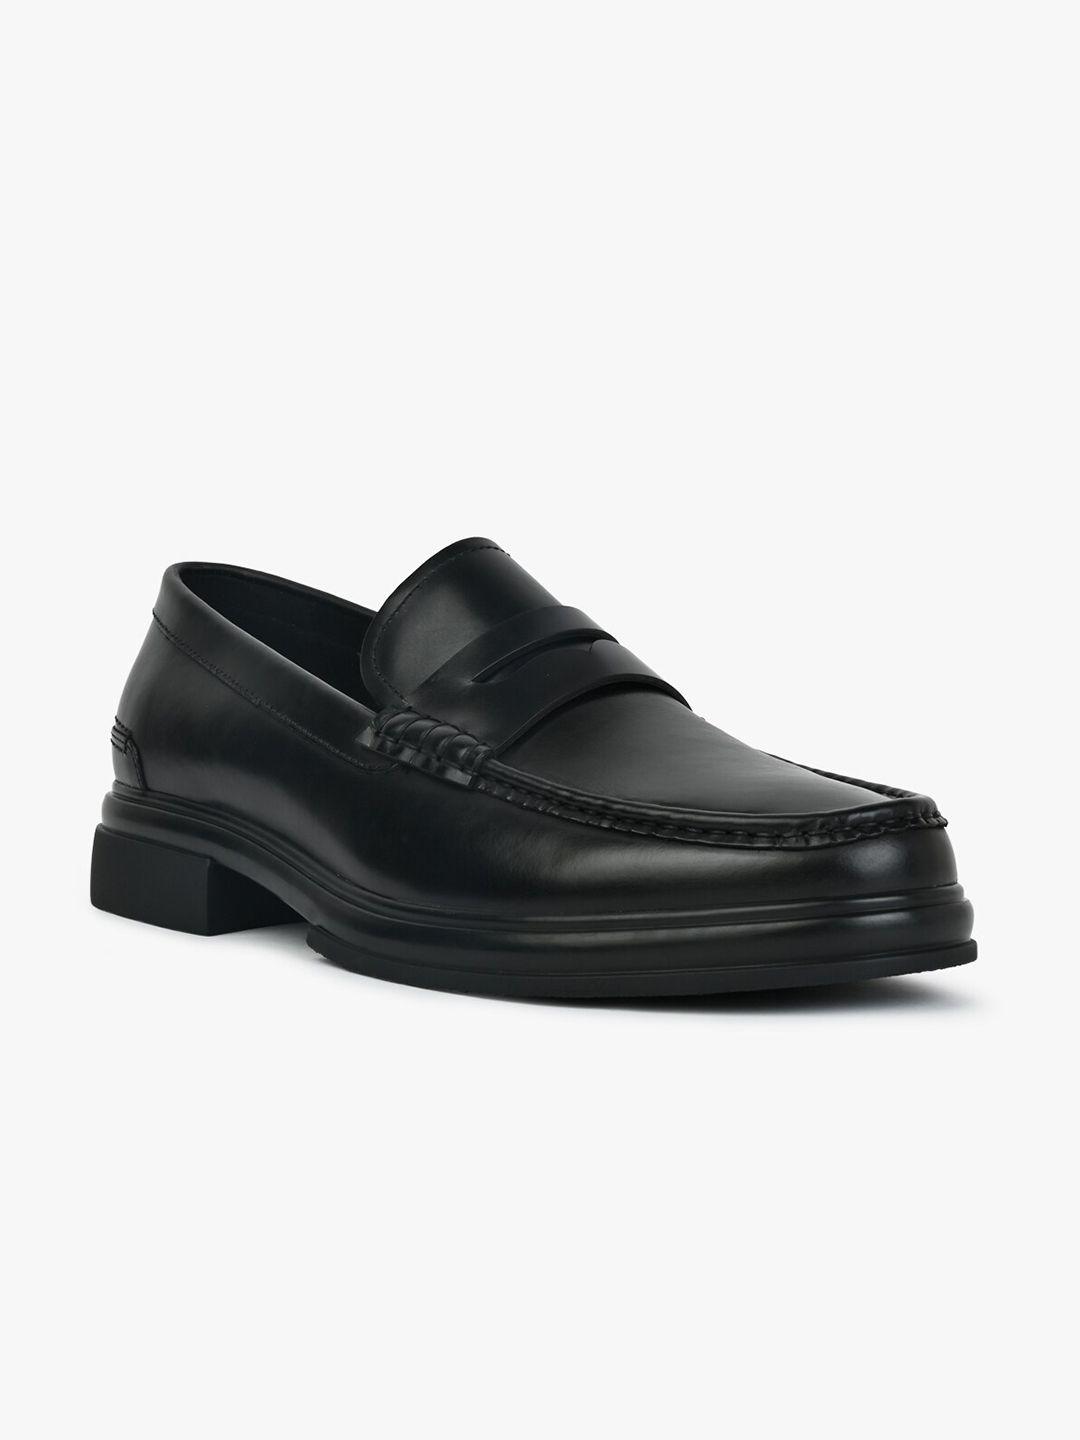 aldo-men-round-toe-leather-formal-loafers